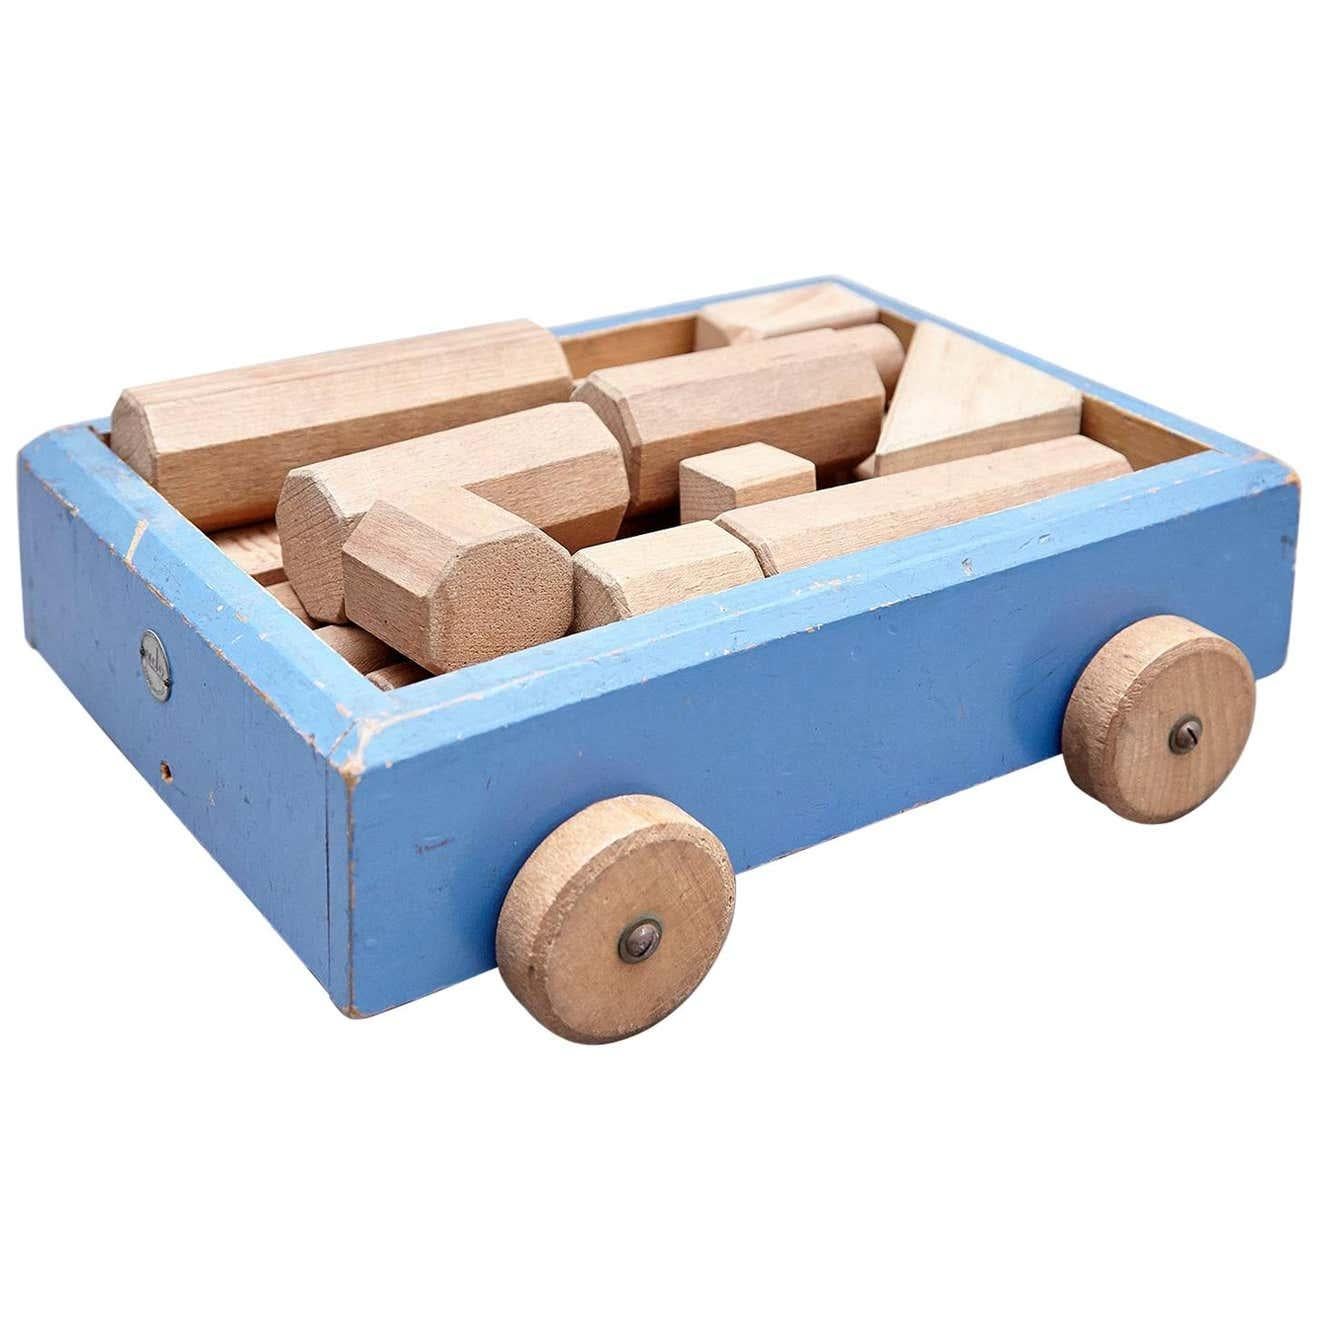 Mid-20th Century Ko Verzuu for Ado, Mid-Century Modern, Wood Car Construction Netherlands Toy For Sale